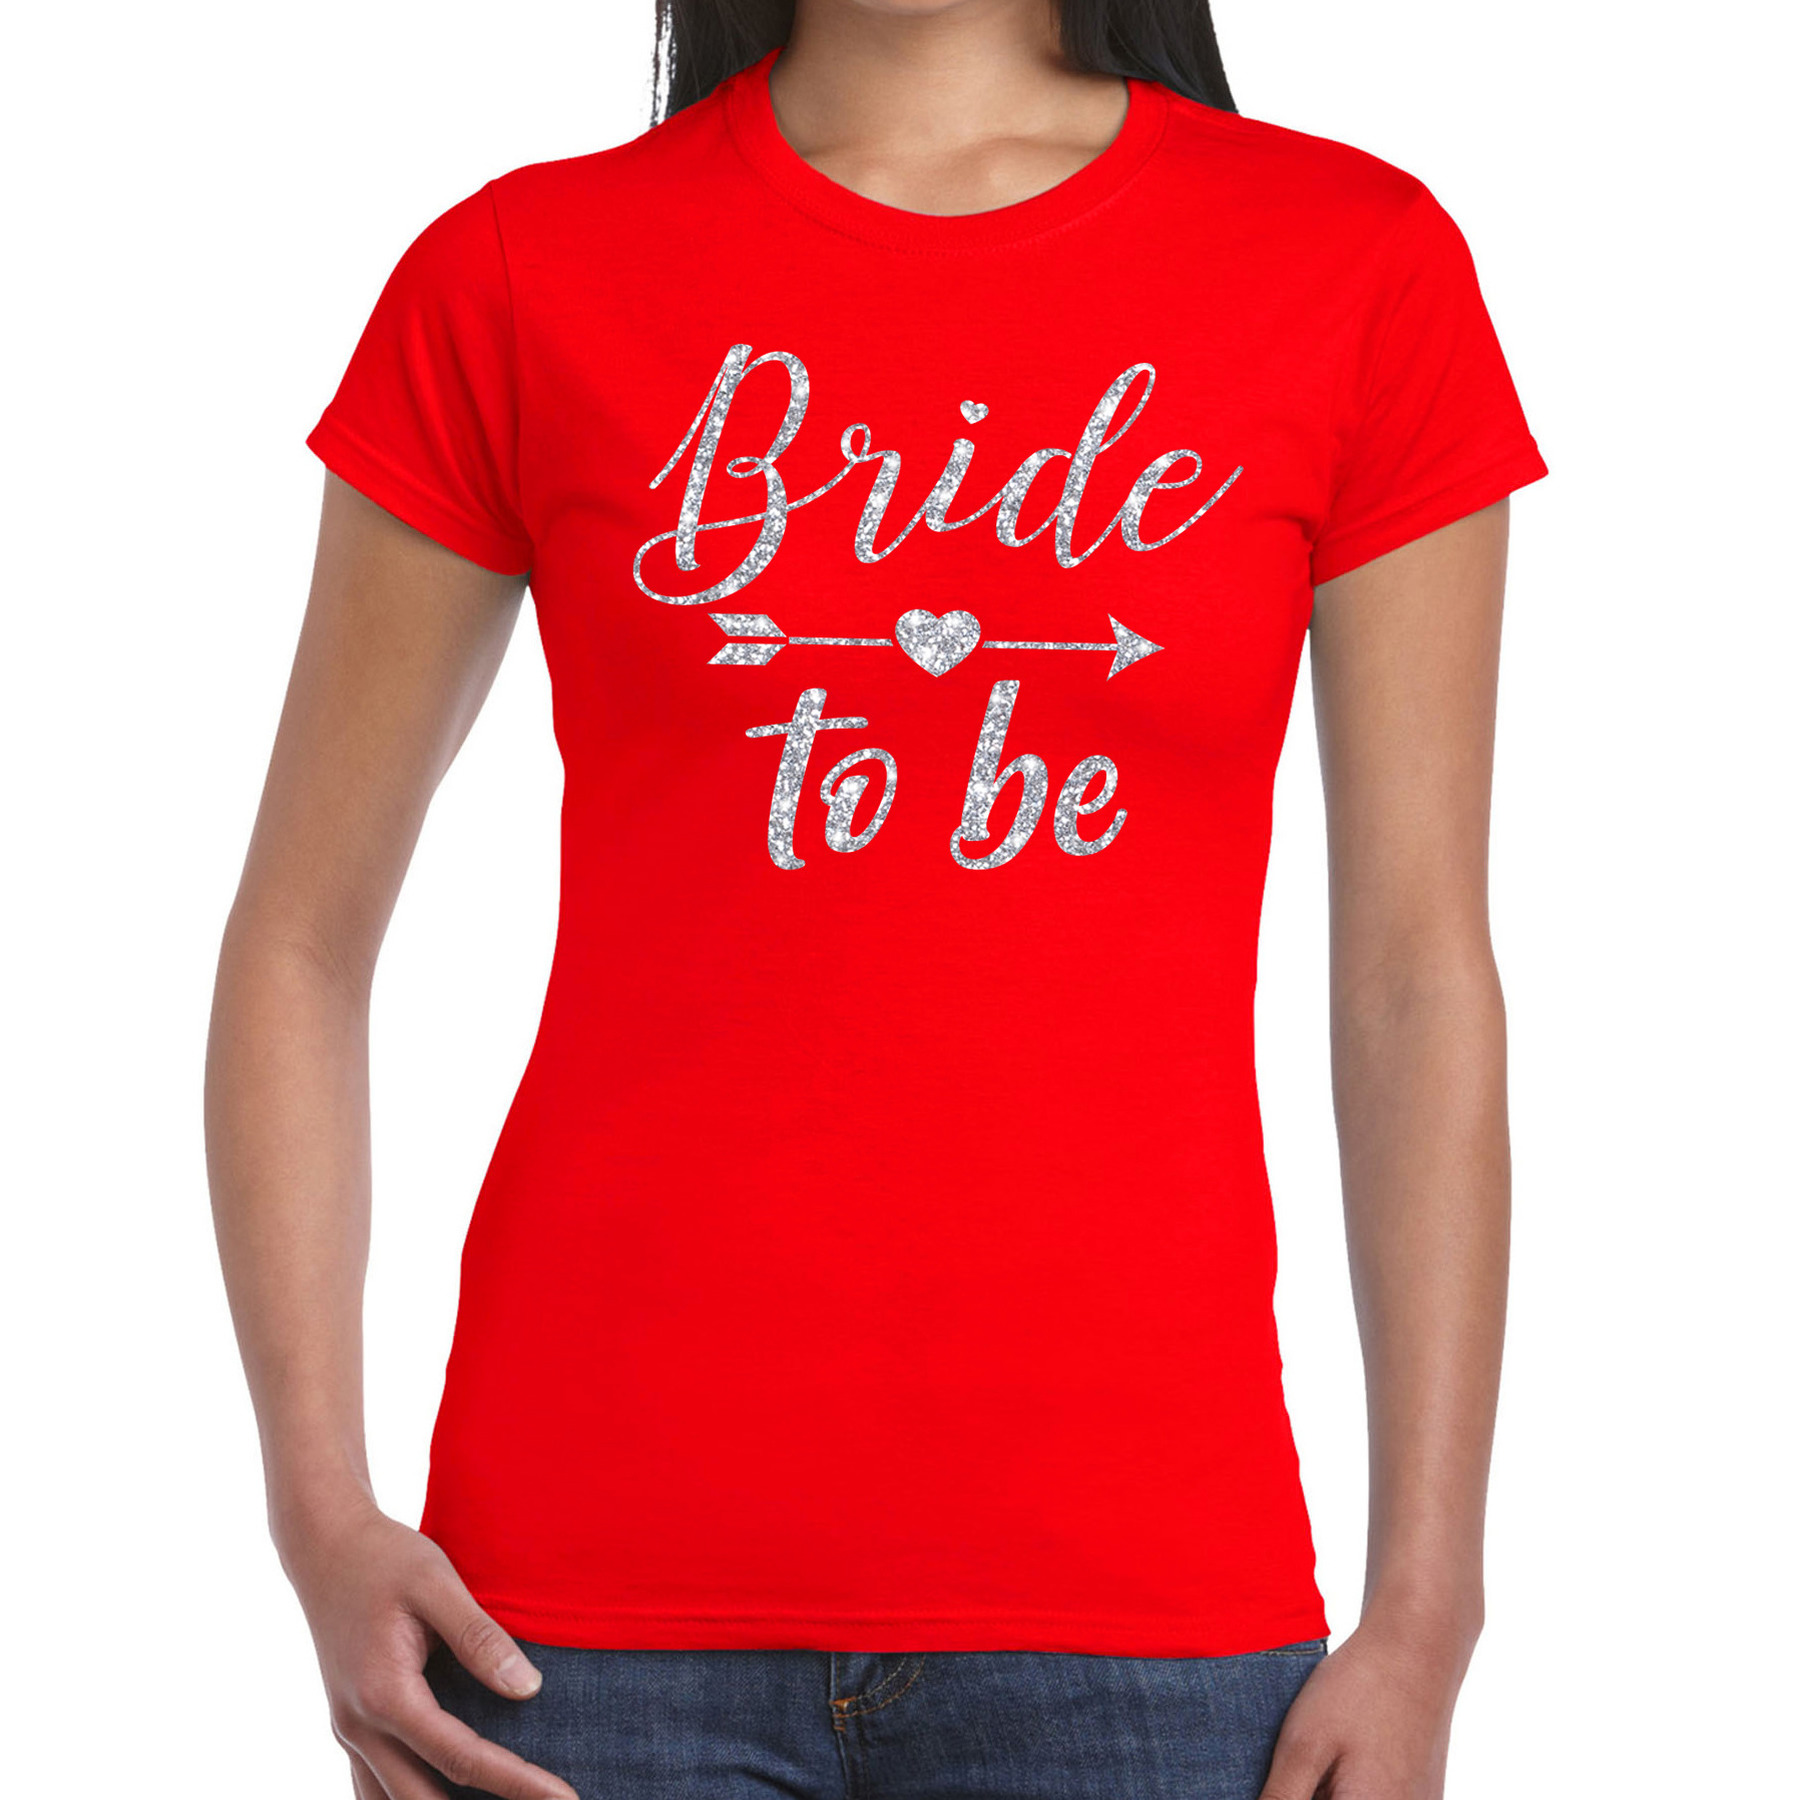 Bride to be tekst t shirt met Cupido pijl rood dames dames shirt Bride to be Vrijgezellenfeest kleding